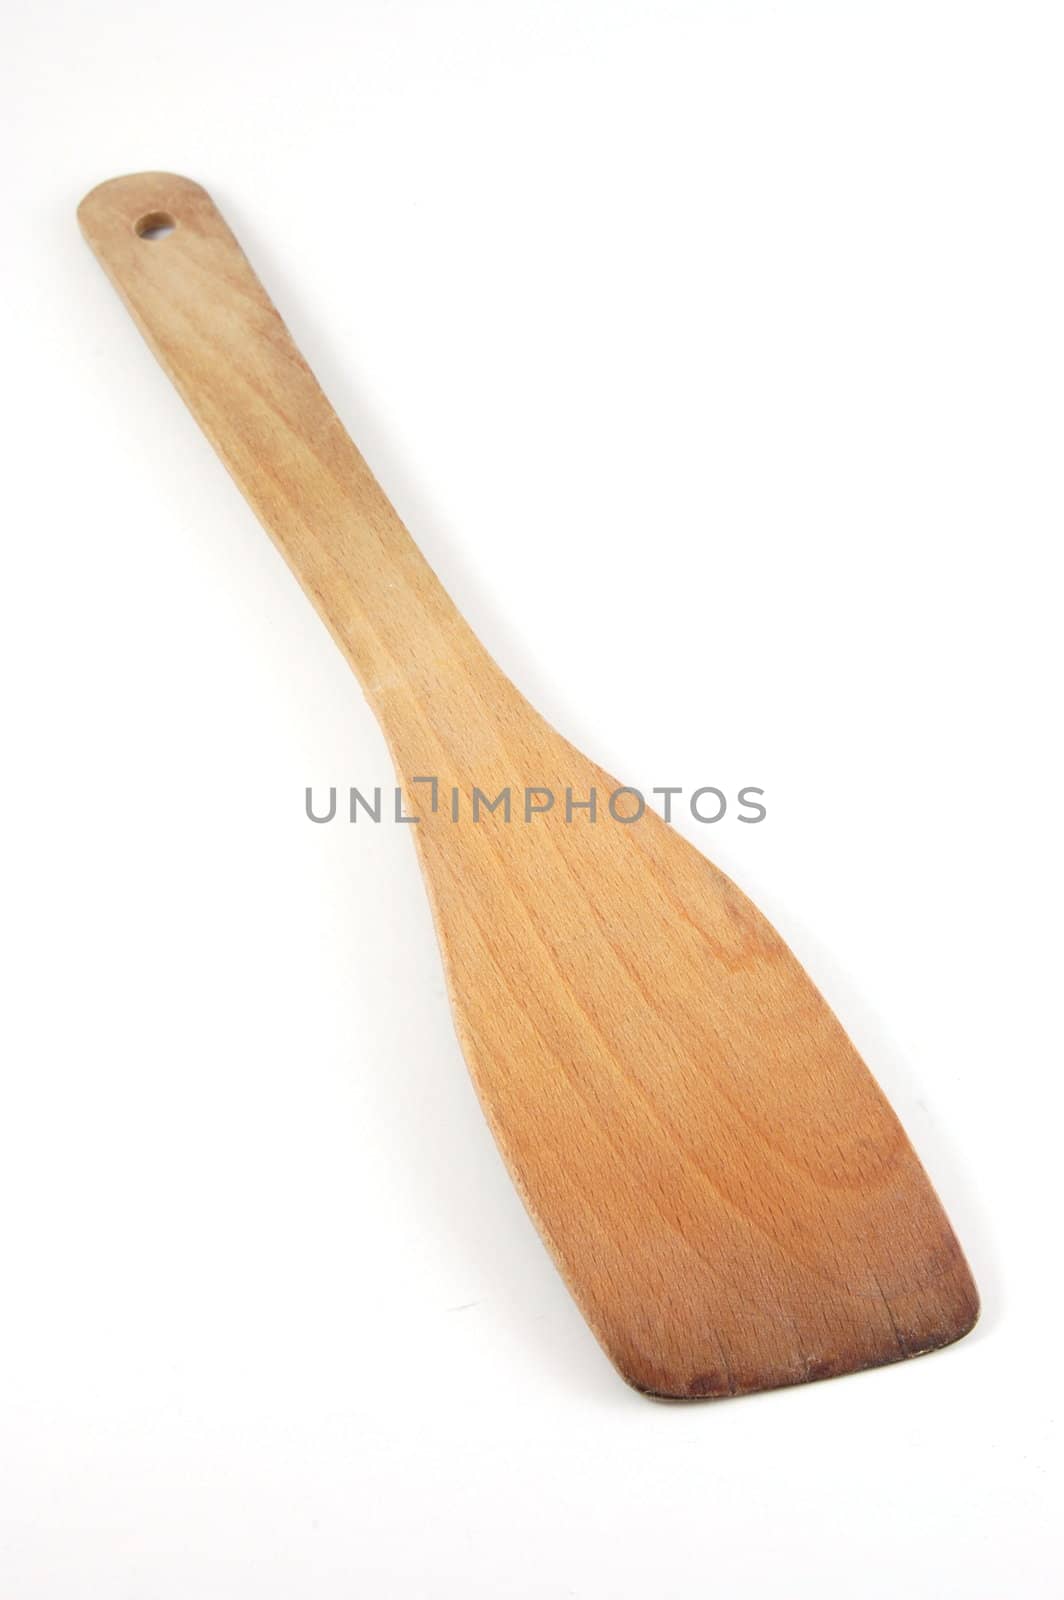 Wooden spoon by gunnar3000